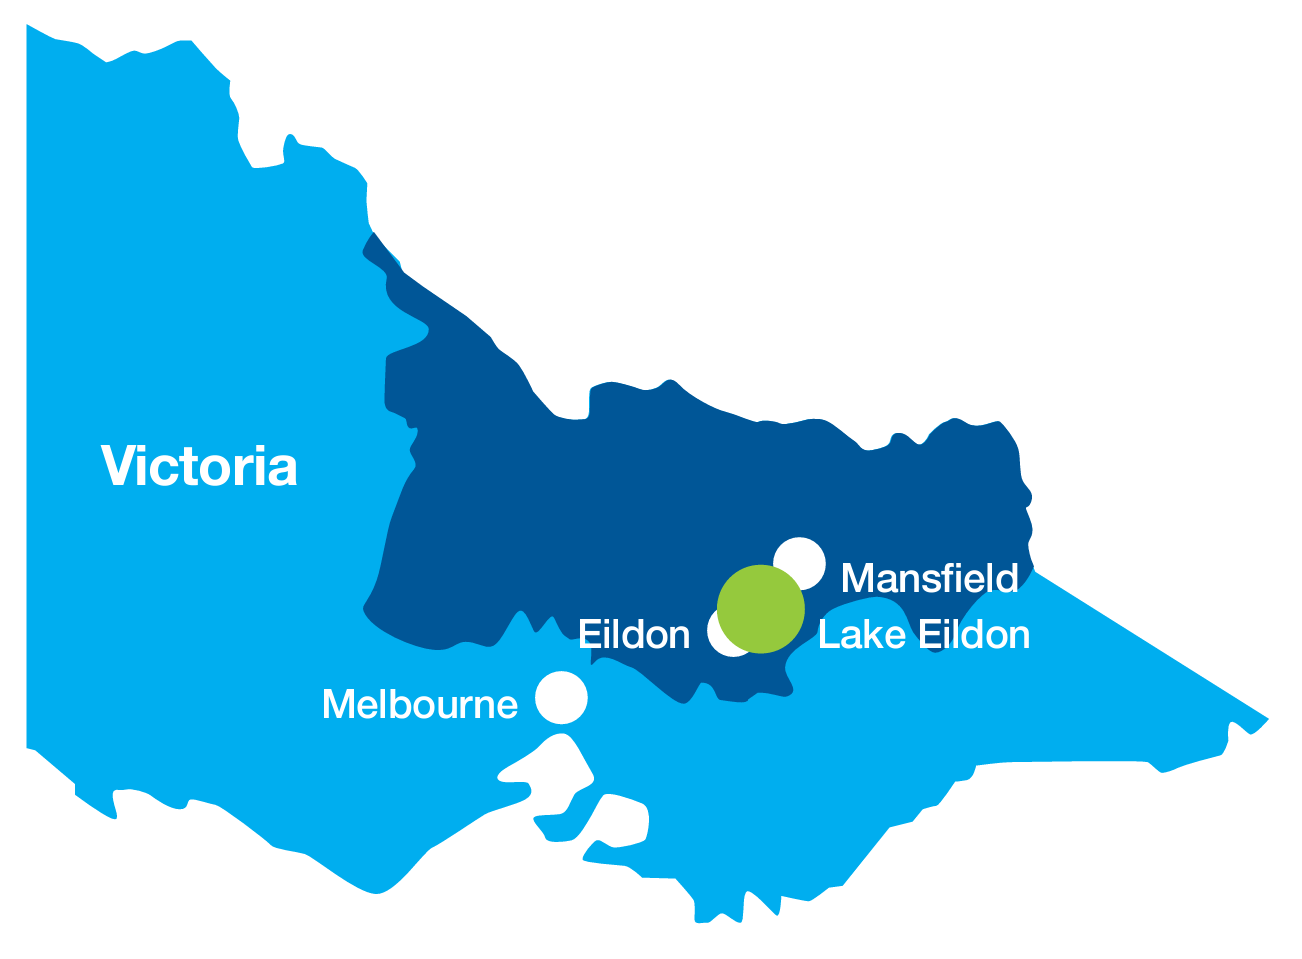 Lake Eildon location in map of Victoria